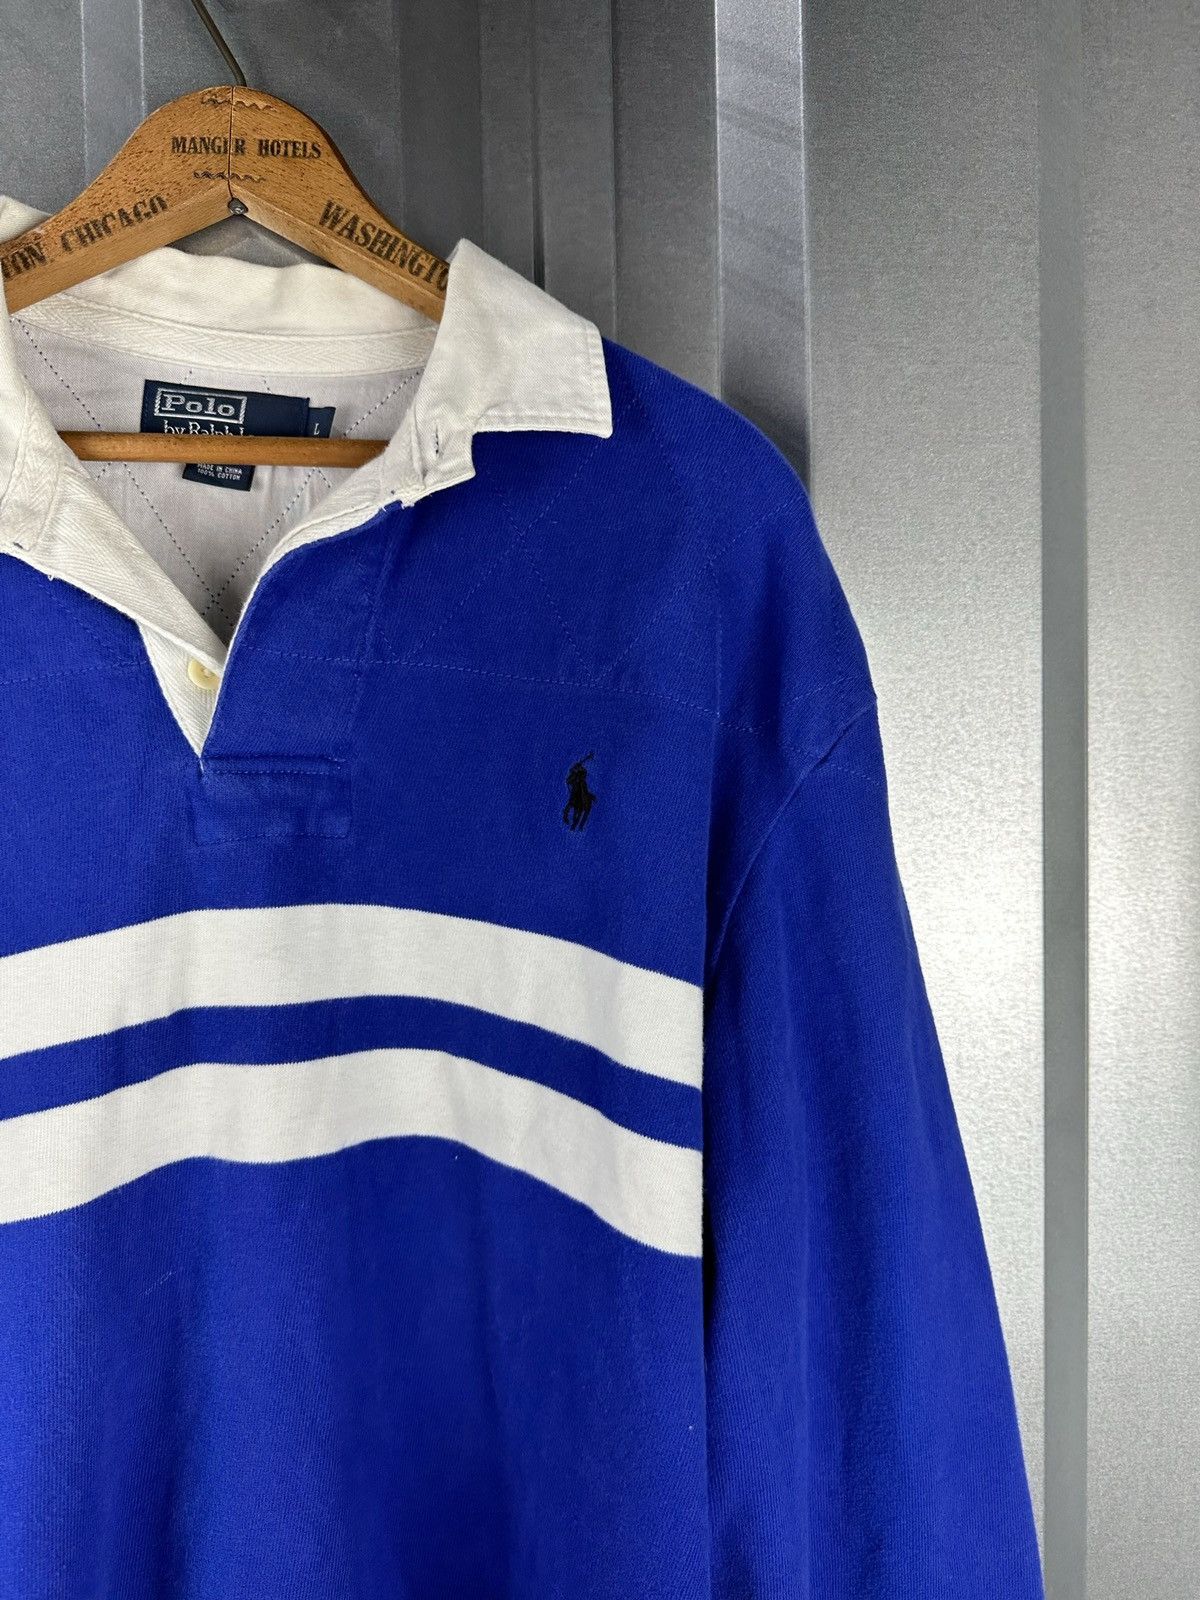 Polo Ralph Lauren Vintage Polo Ralph Lauren Blue Striped Rugby Polo Shirt Size US L / EU 52-54 / 3 - 3 Thumbnail